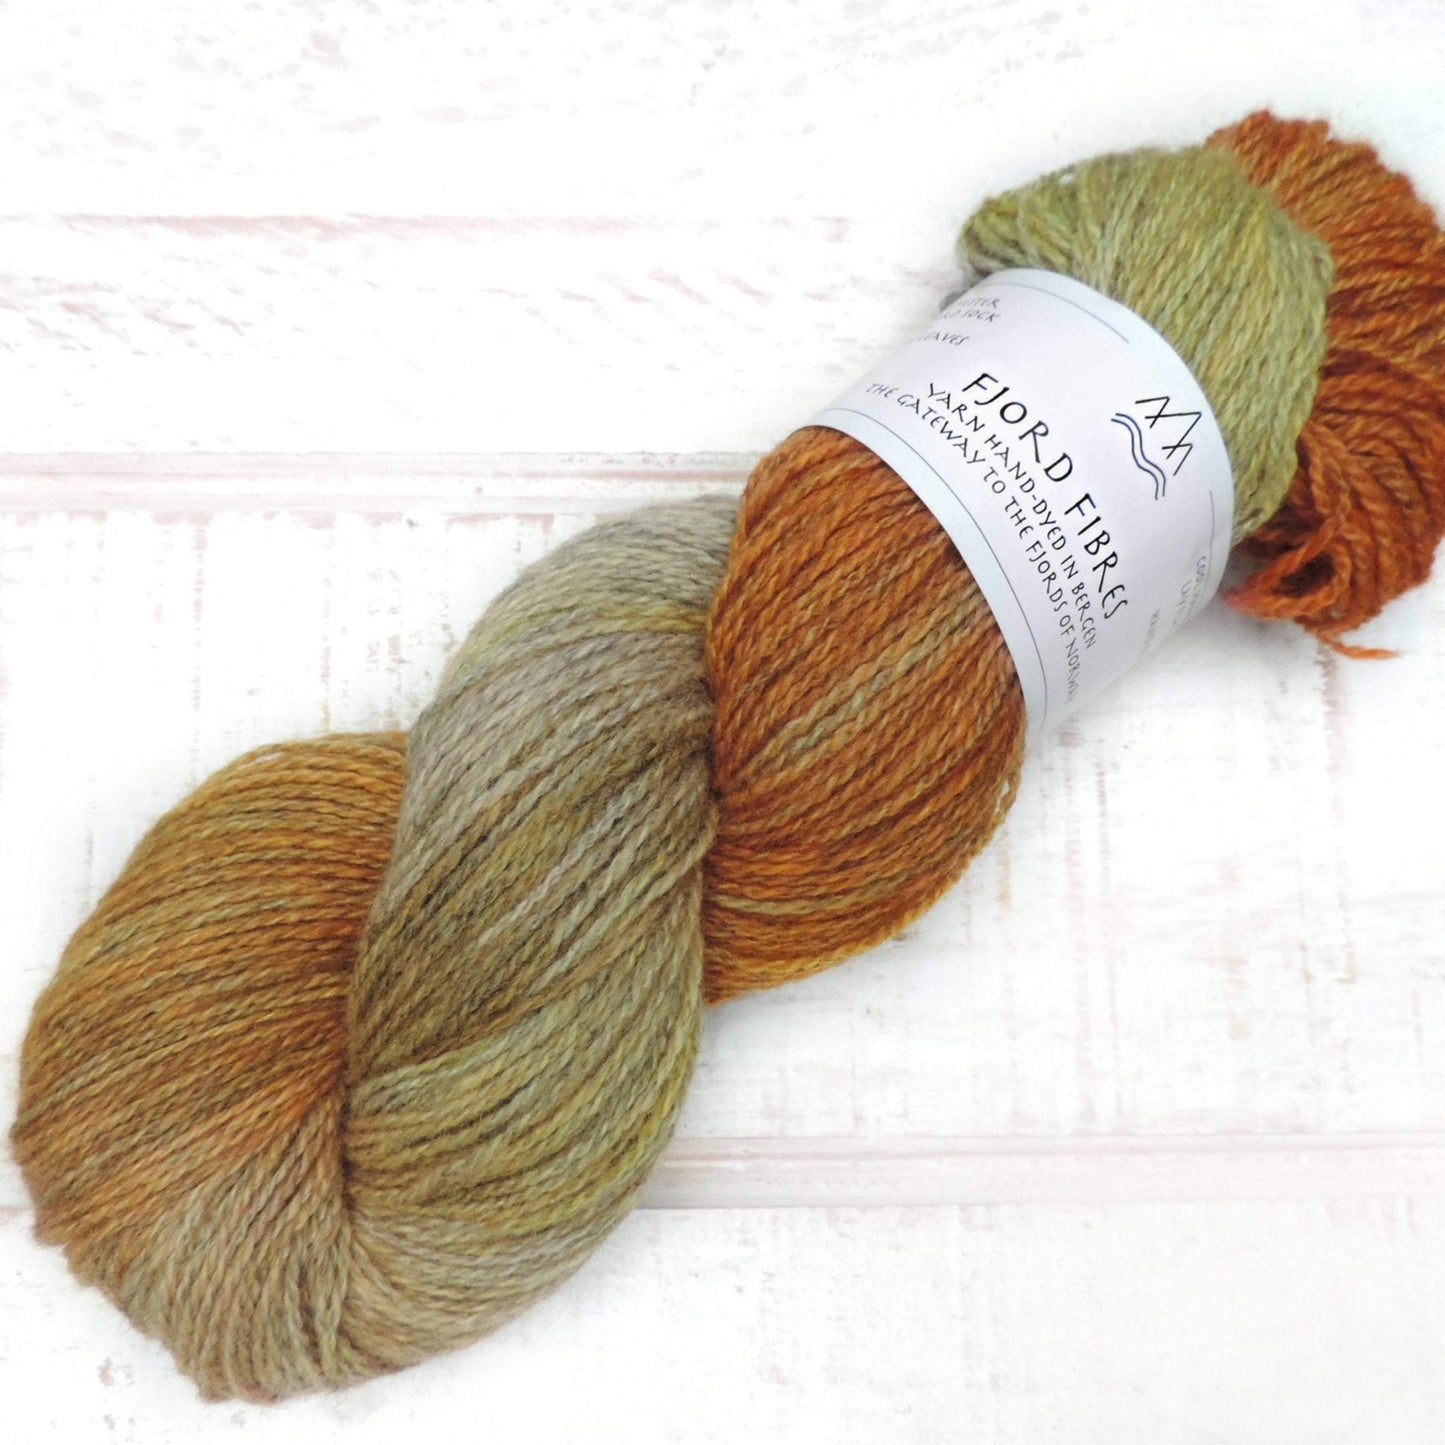 Turning Leaves - Trollfjord Sock - Hand Dyed Yarn - Variegated Yarn